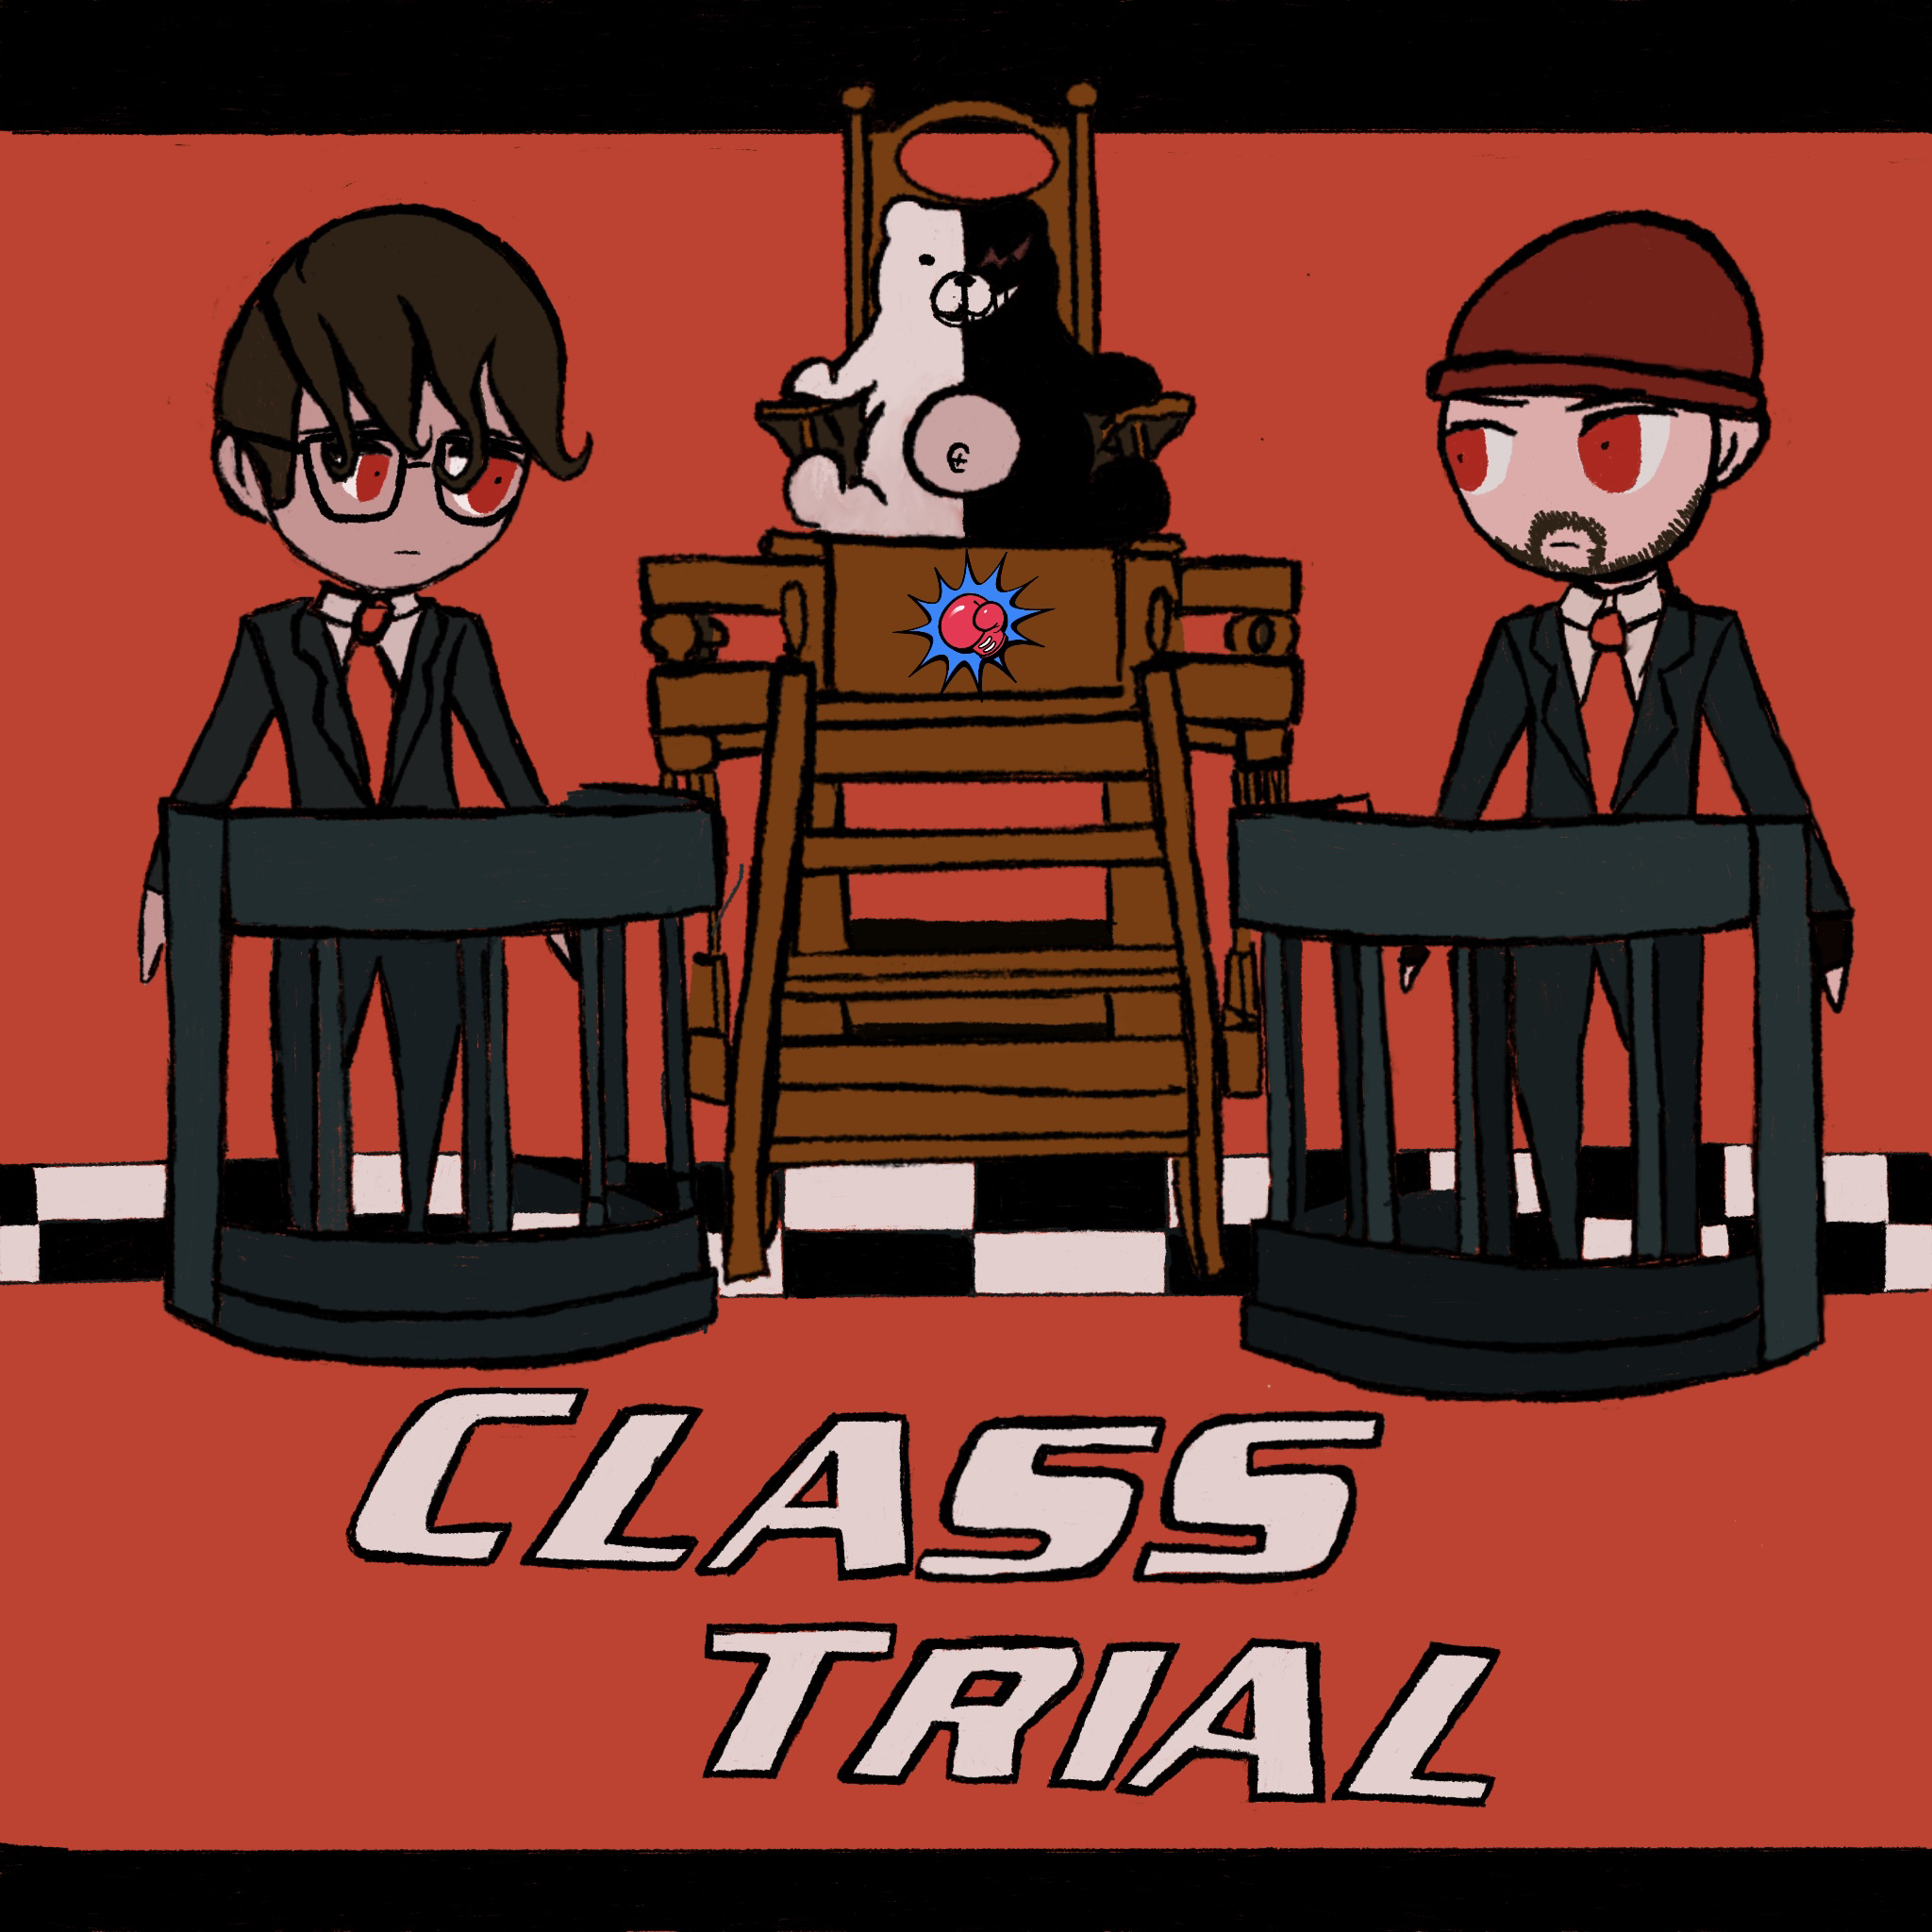 Danganronpa Class Trial 2 Answers